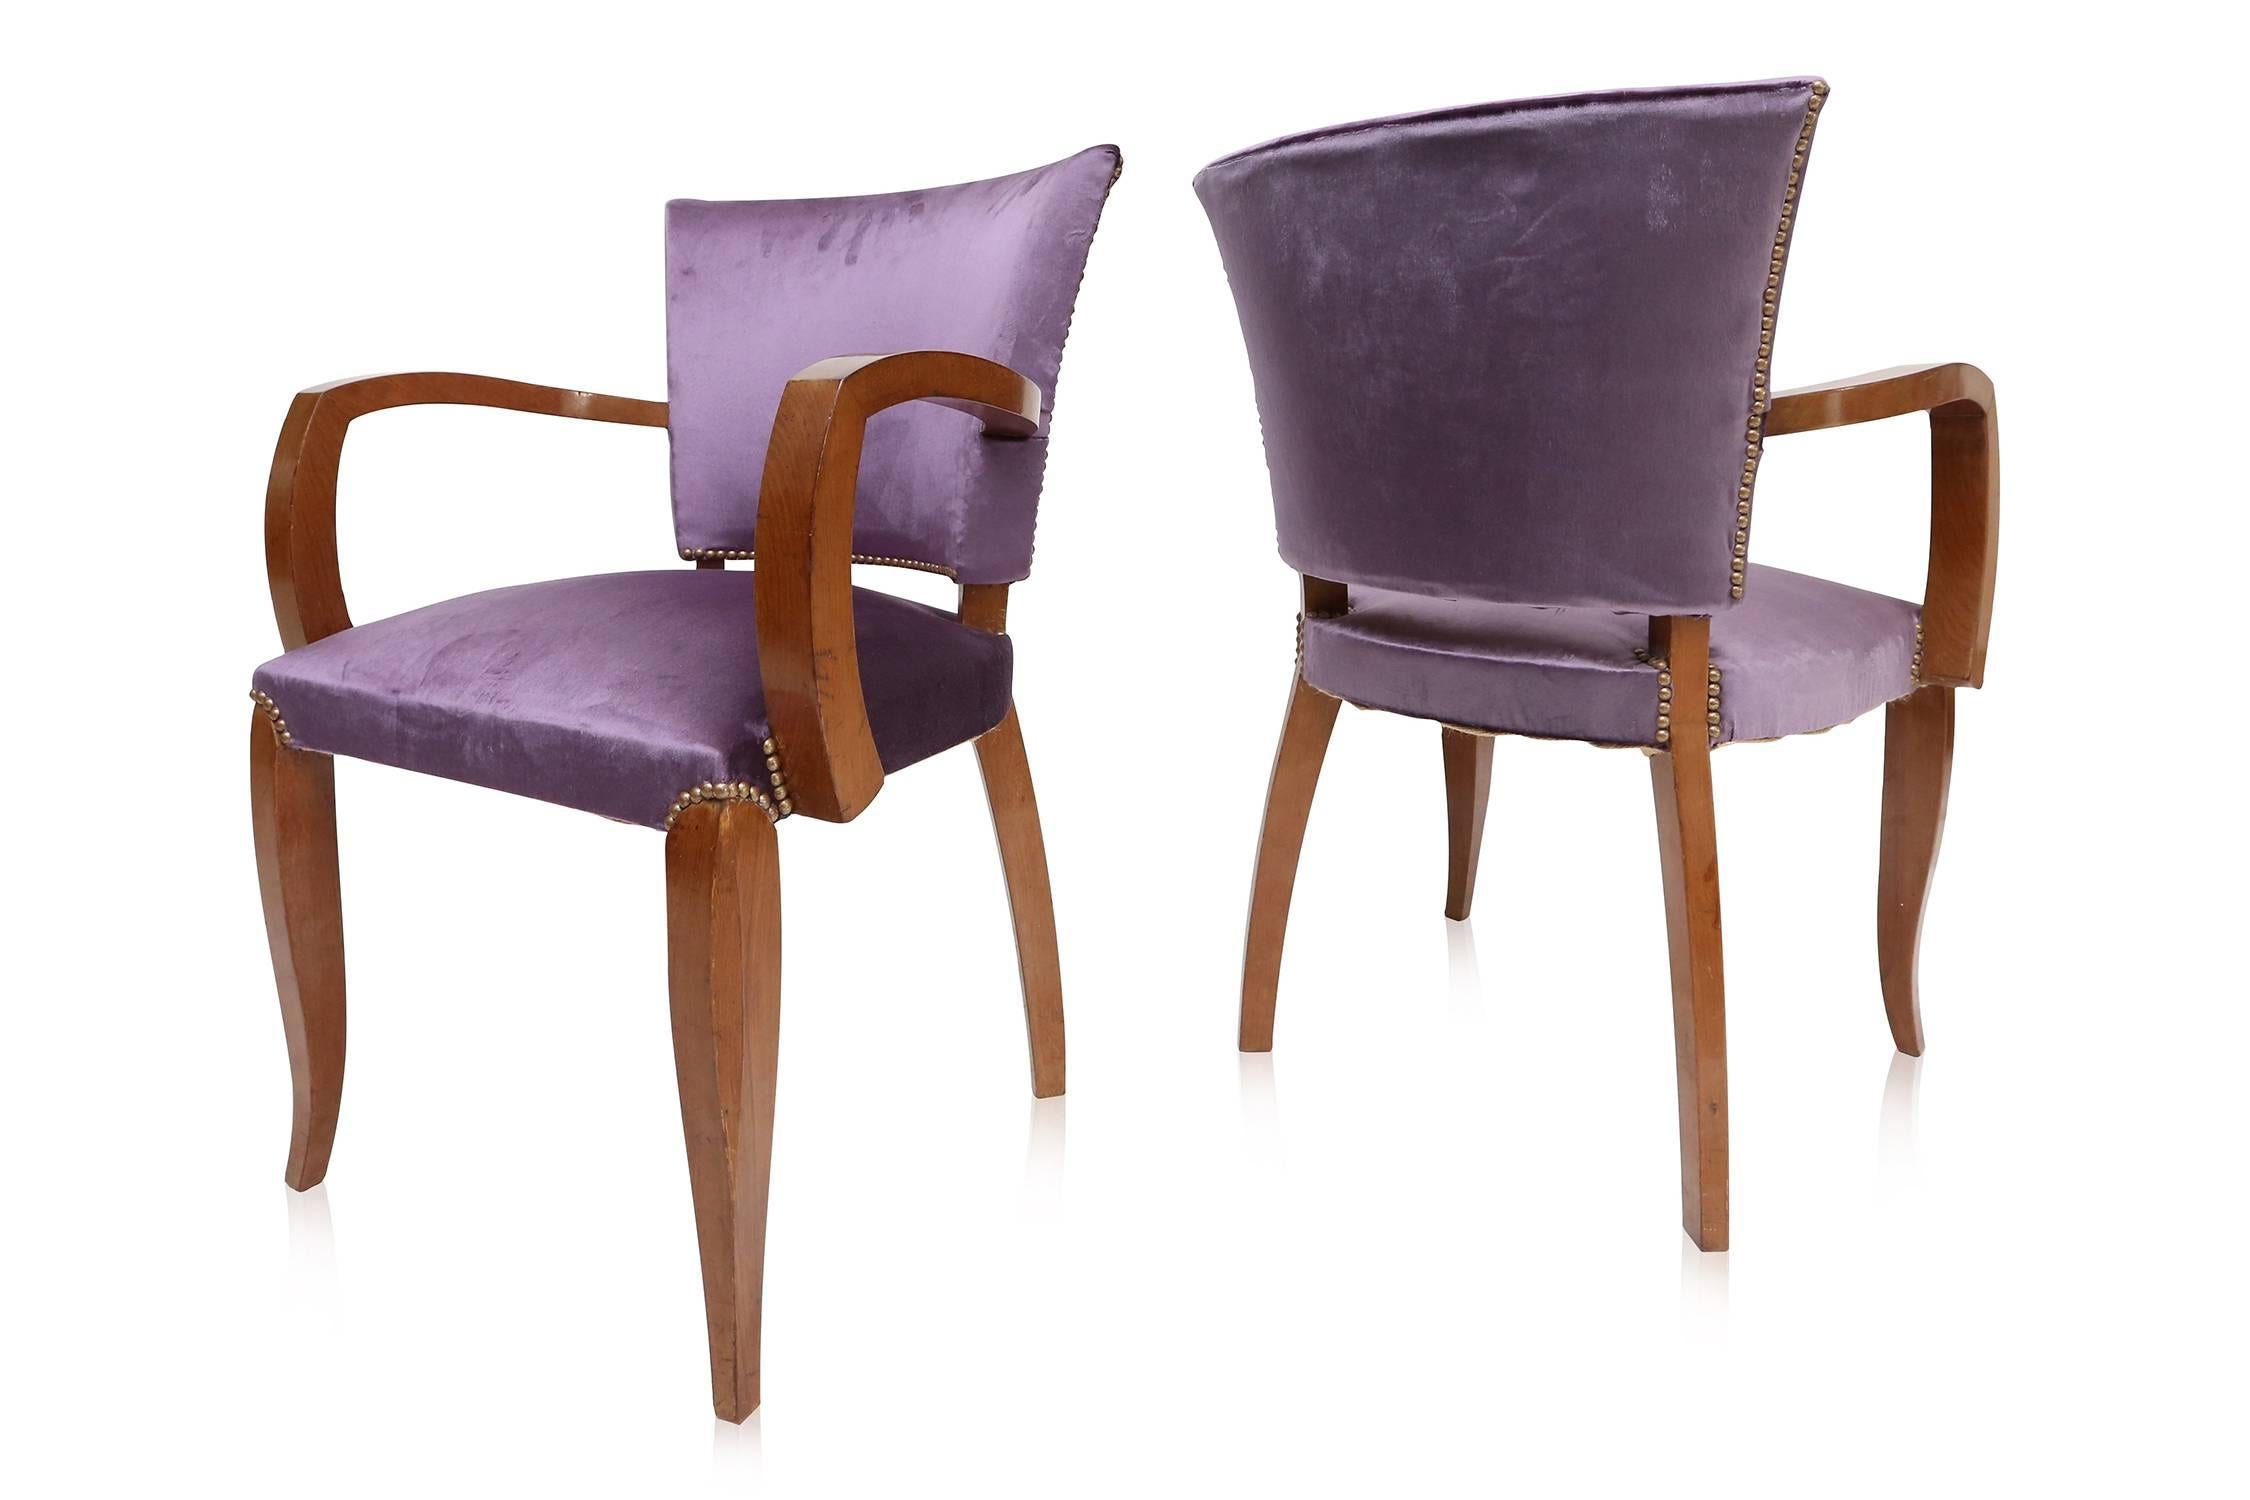 Mid-20th Century Mahogany Art Deco armchairs with purple velvet upholstery